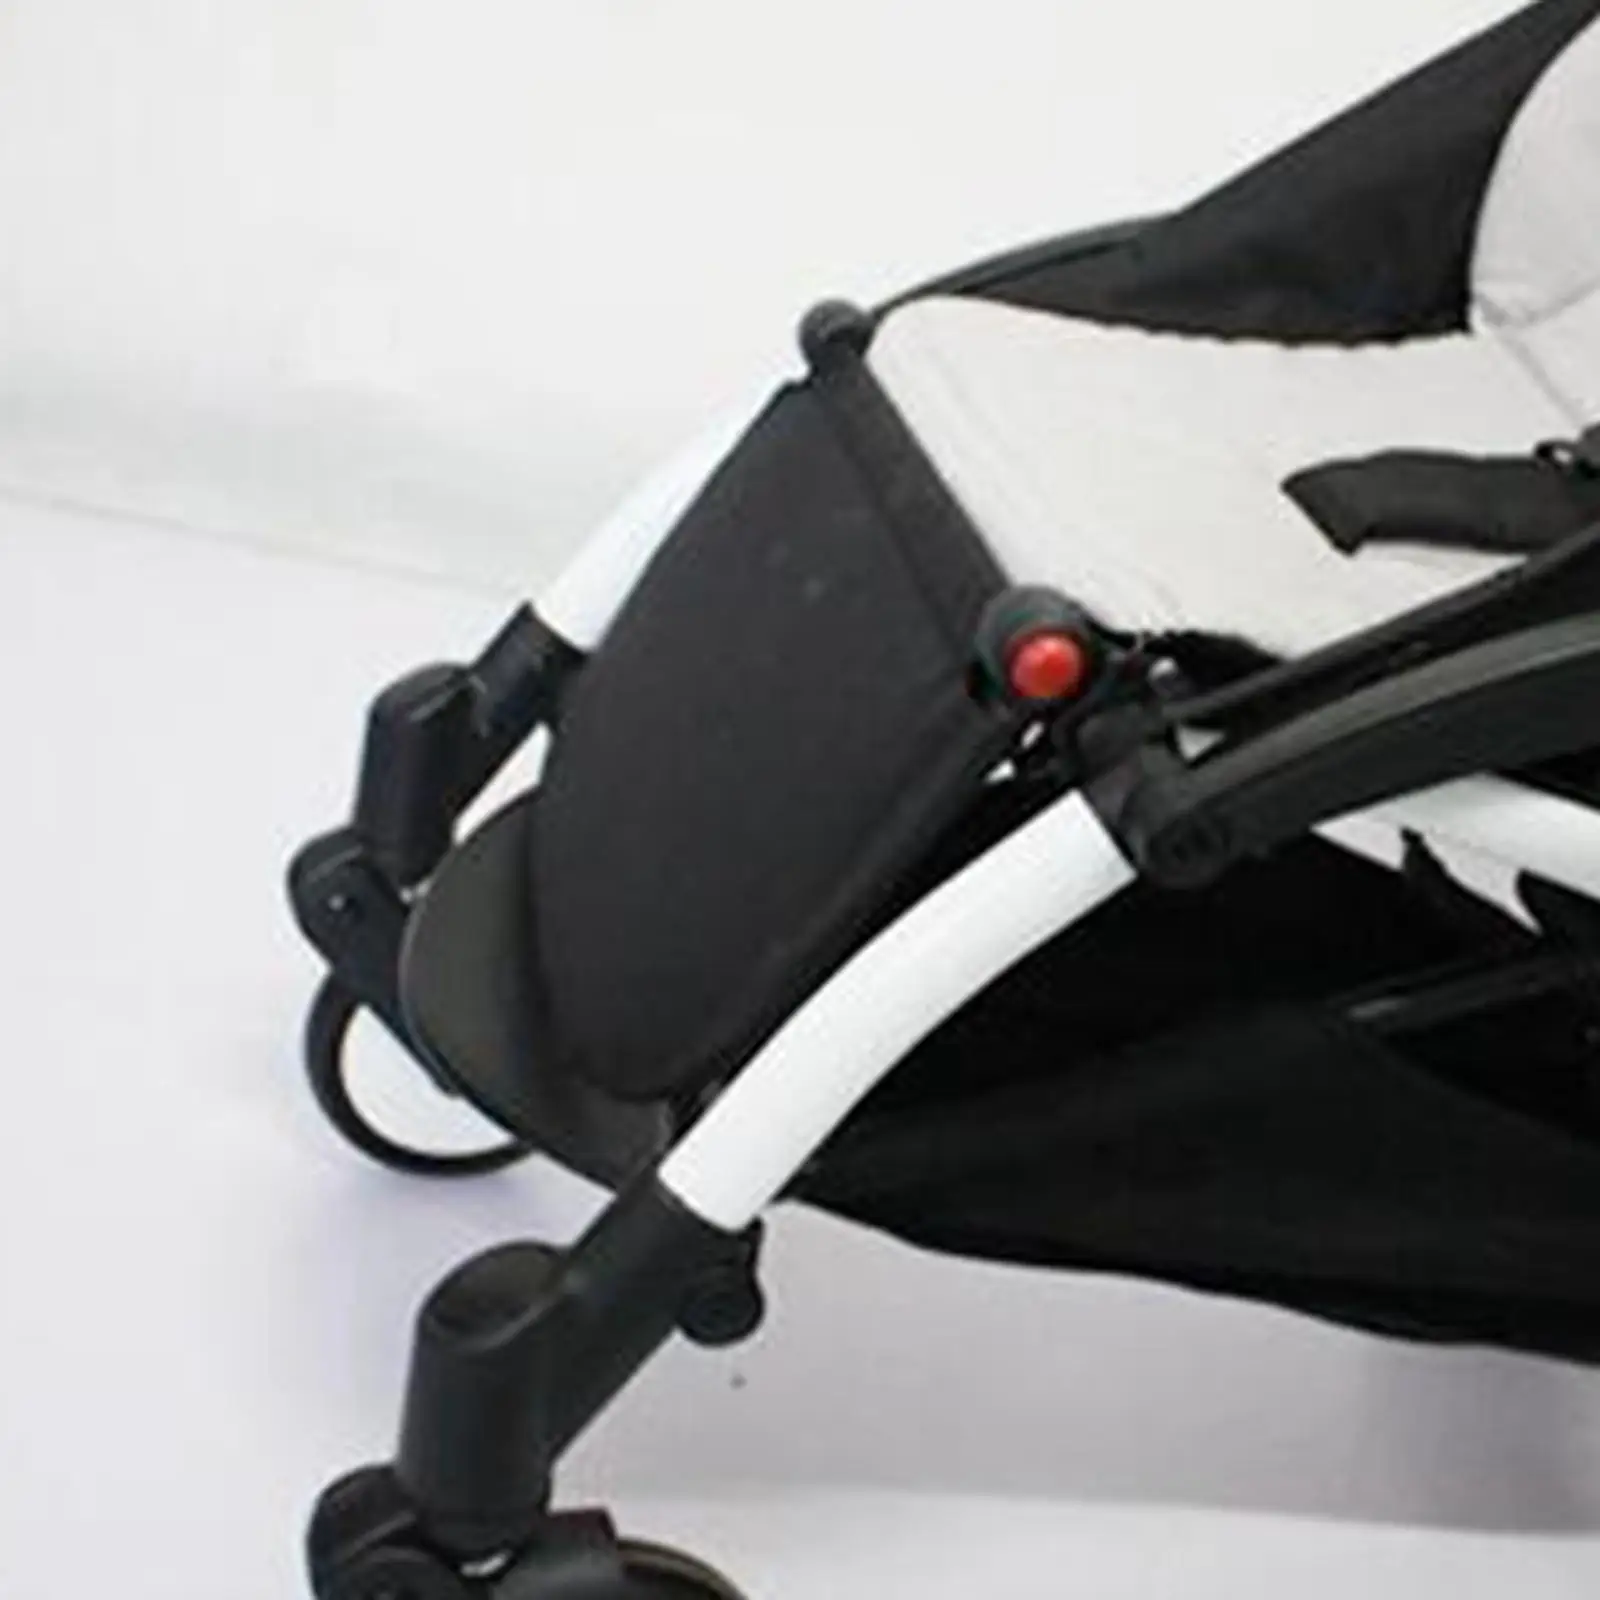 Footrest Accessories Feet Extension Pram Footboard Infant Kids Child